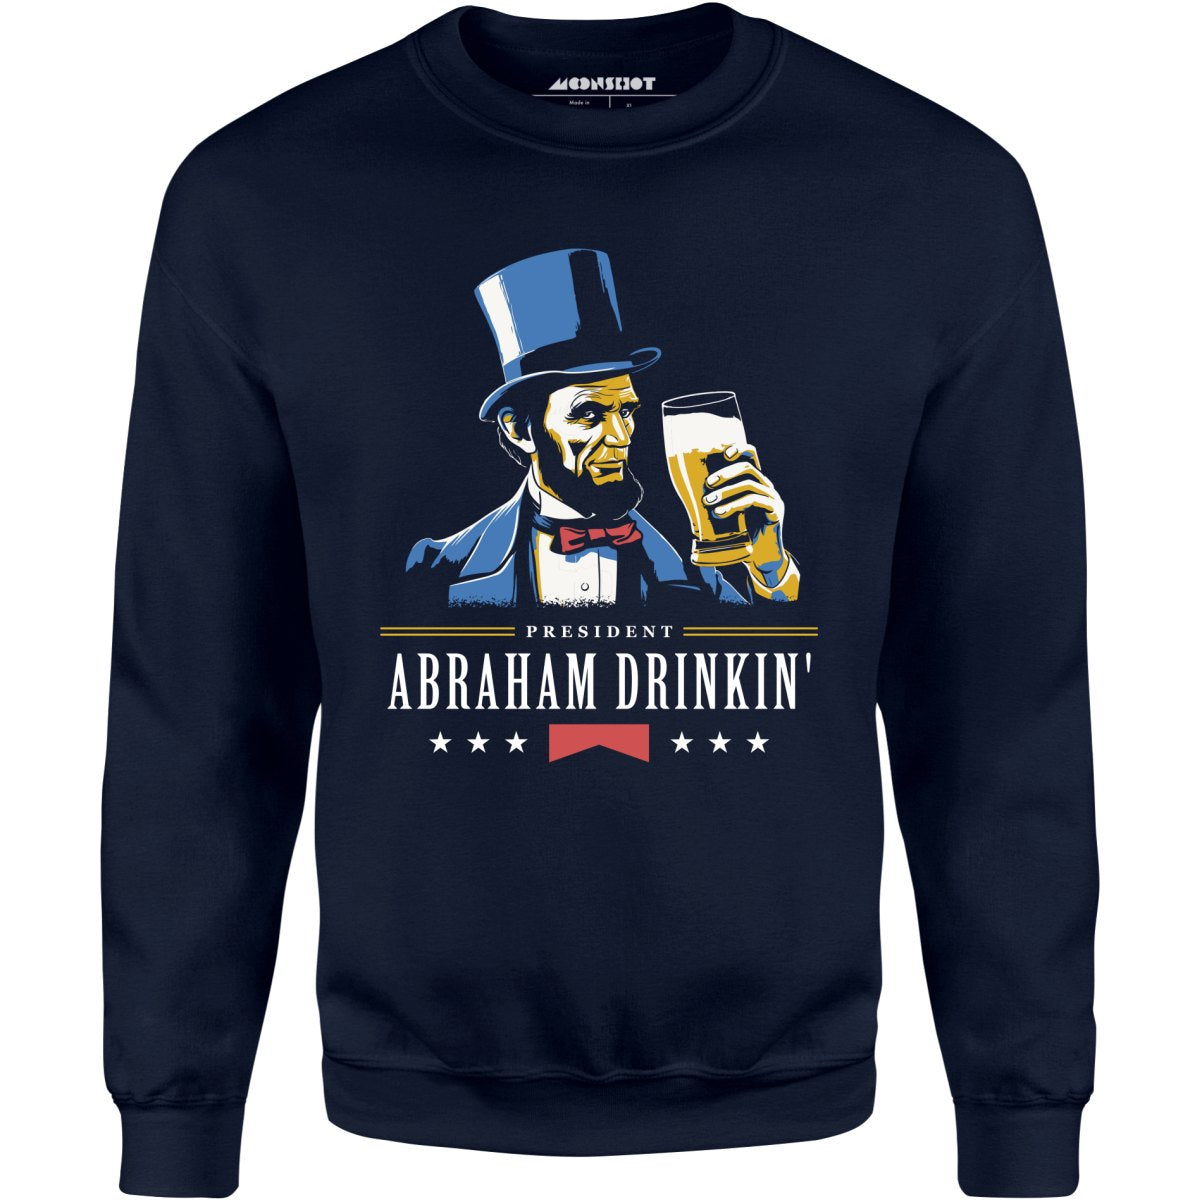 President Abraham Drinkin' - Unisex Sweatshirt